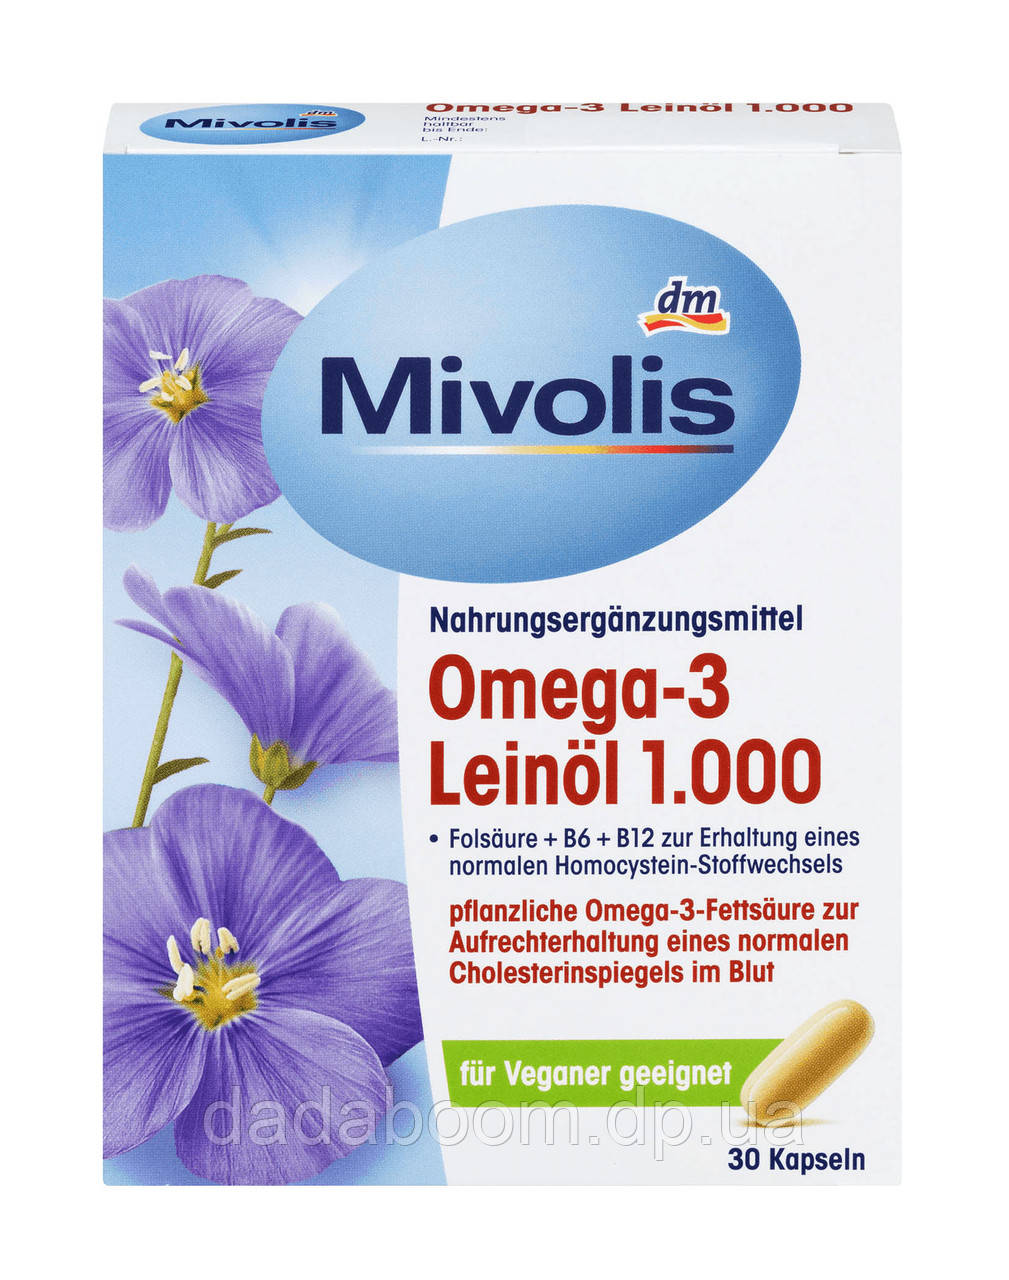 

Mivolis Omega 3 Leinöl (из льняного масла) 1000 мг, 30 капс.